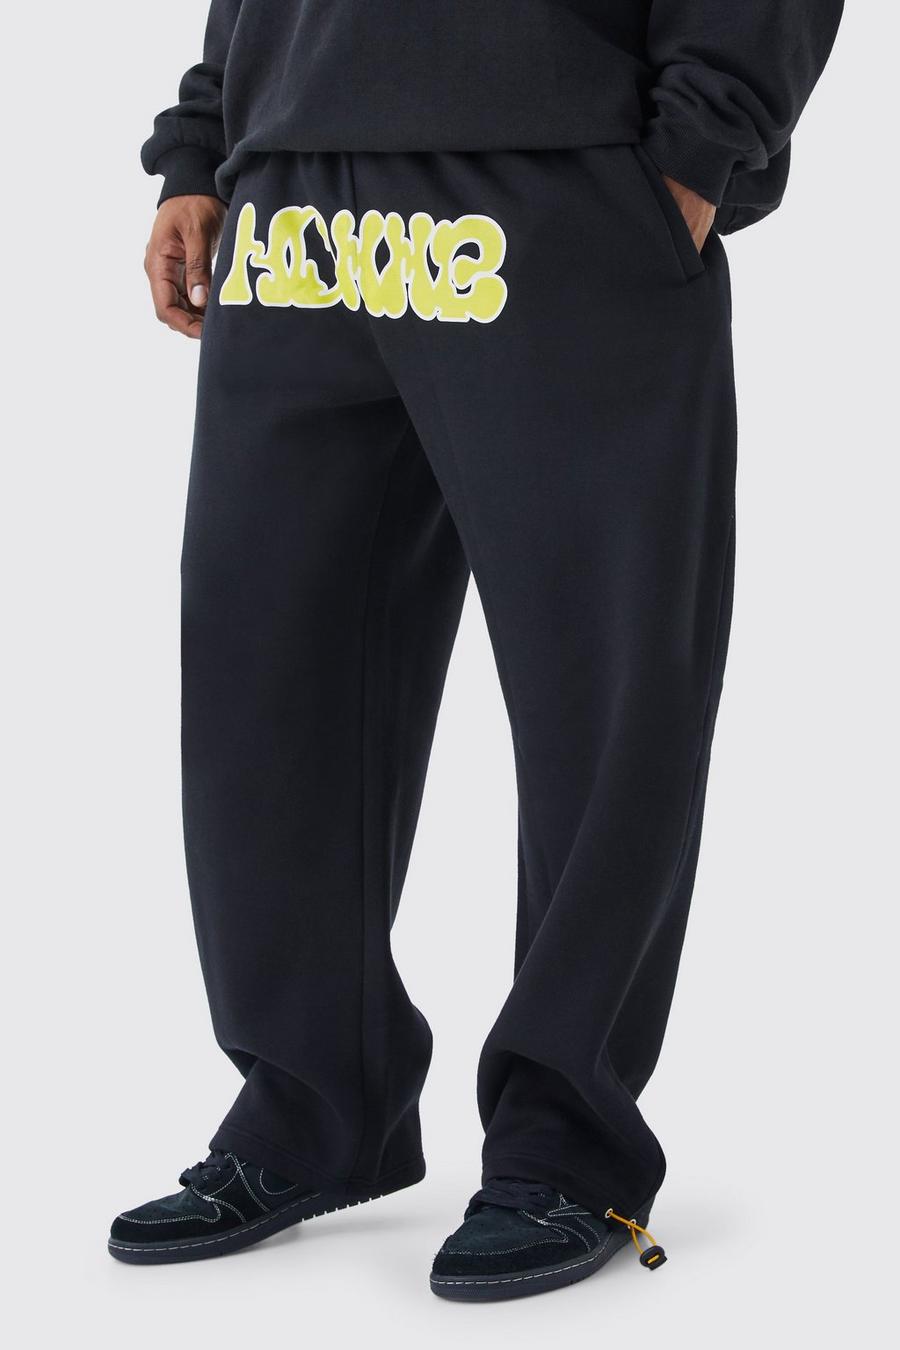 Pantalón deportivo Plus oversize con etiqueta Homme, Black